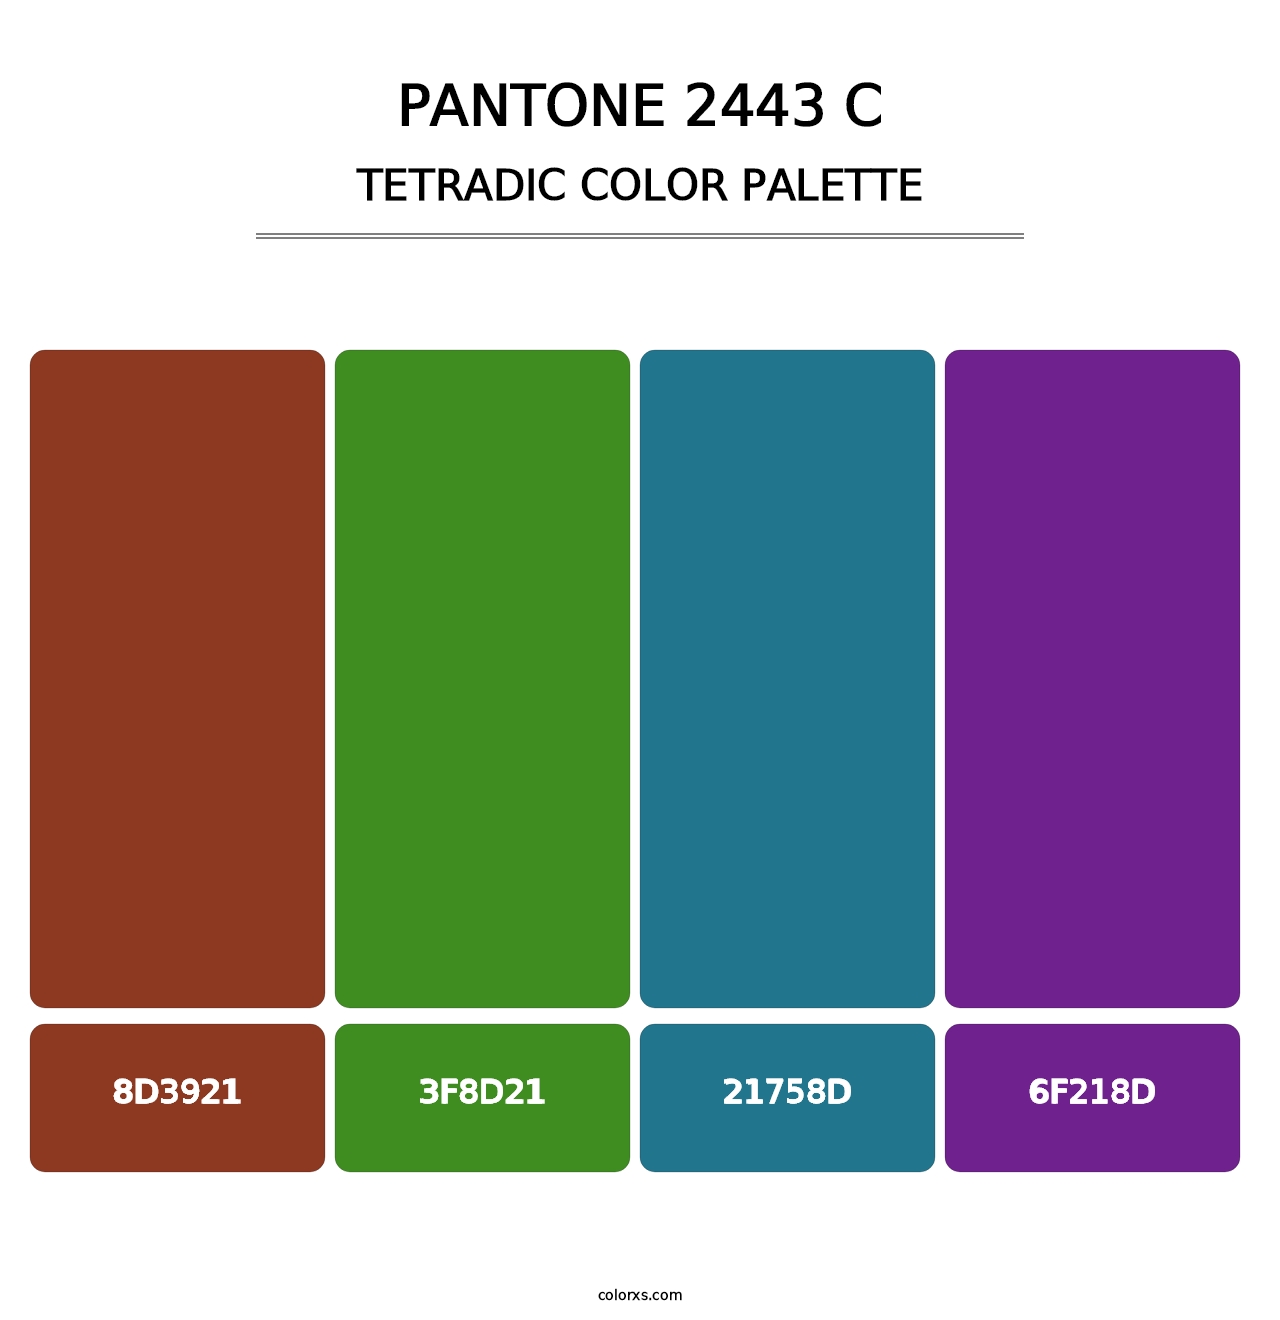 PANTONE 2443 C - Tetradic Color Palette